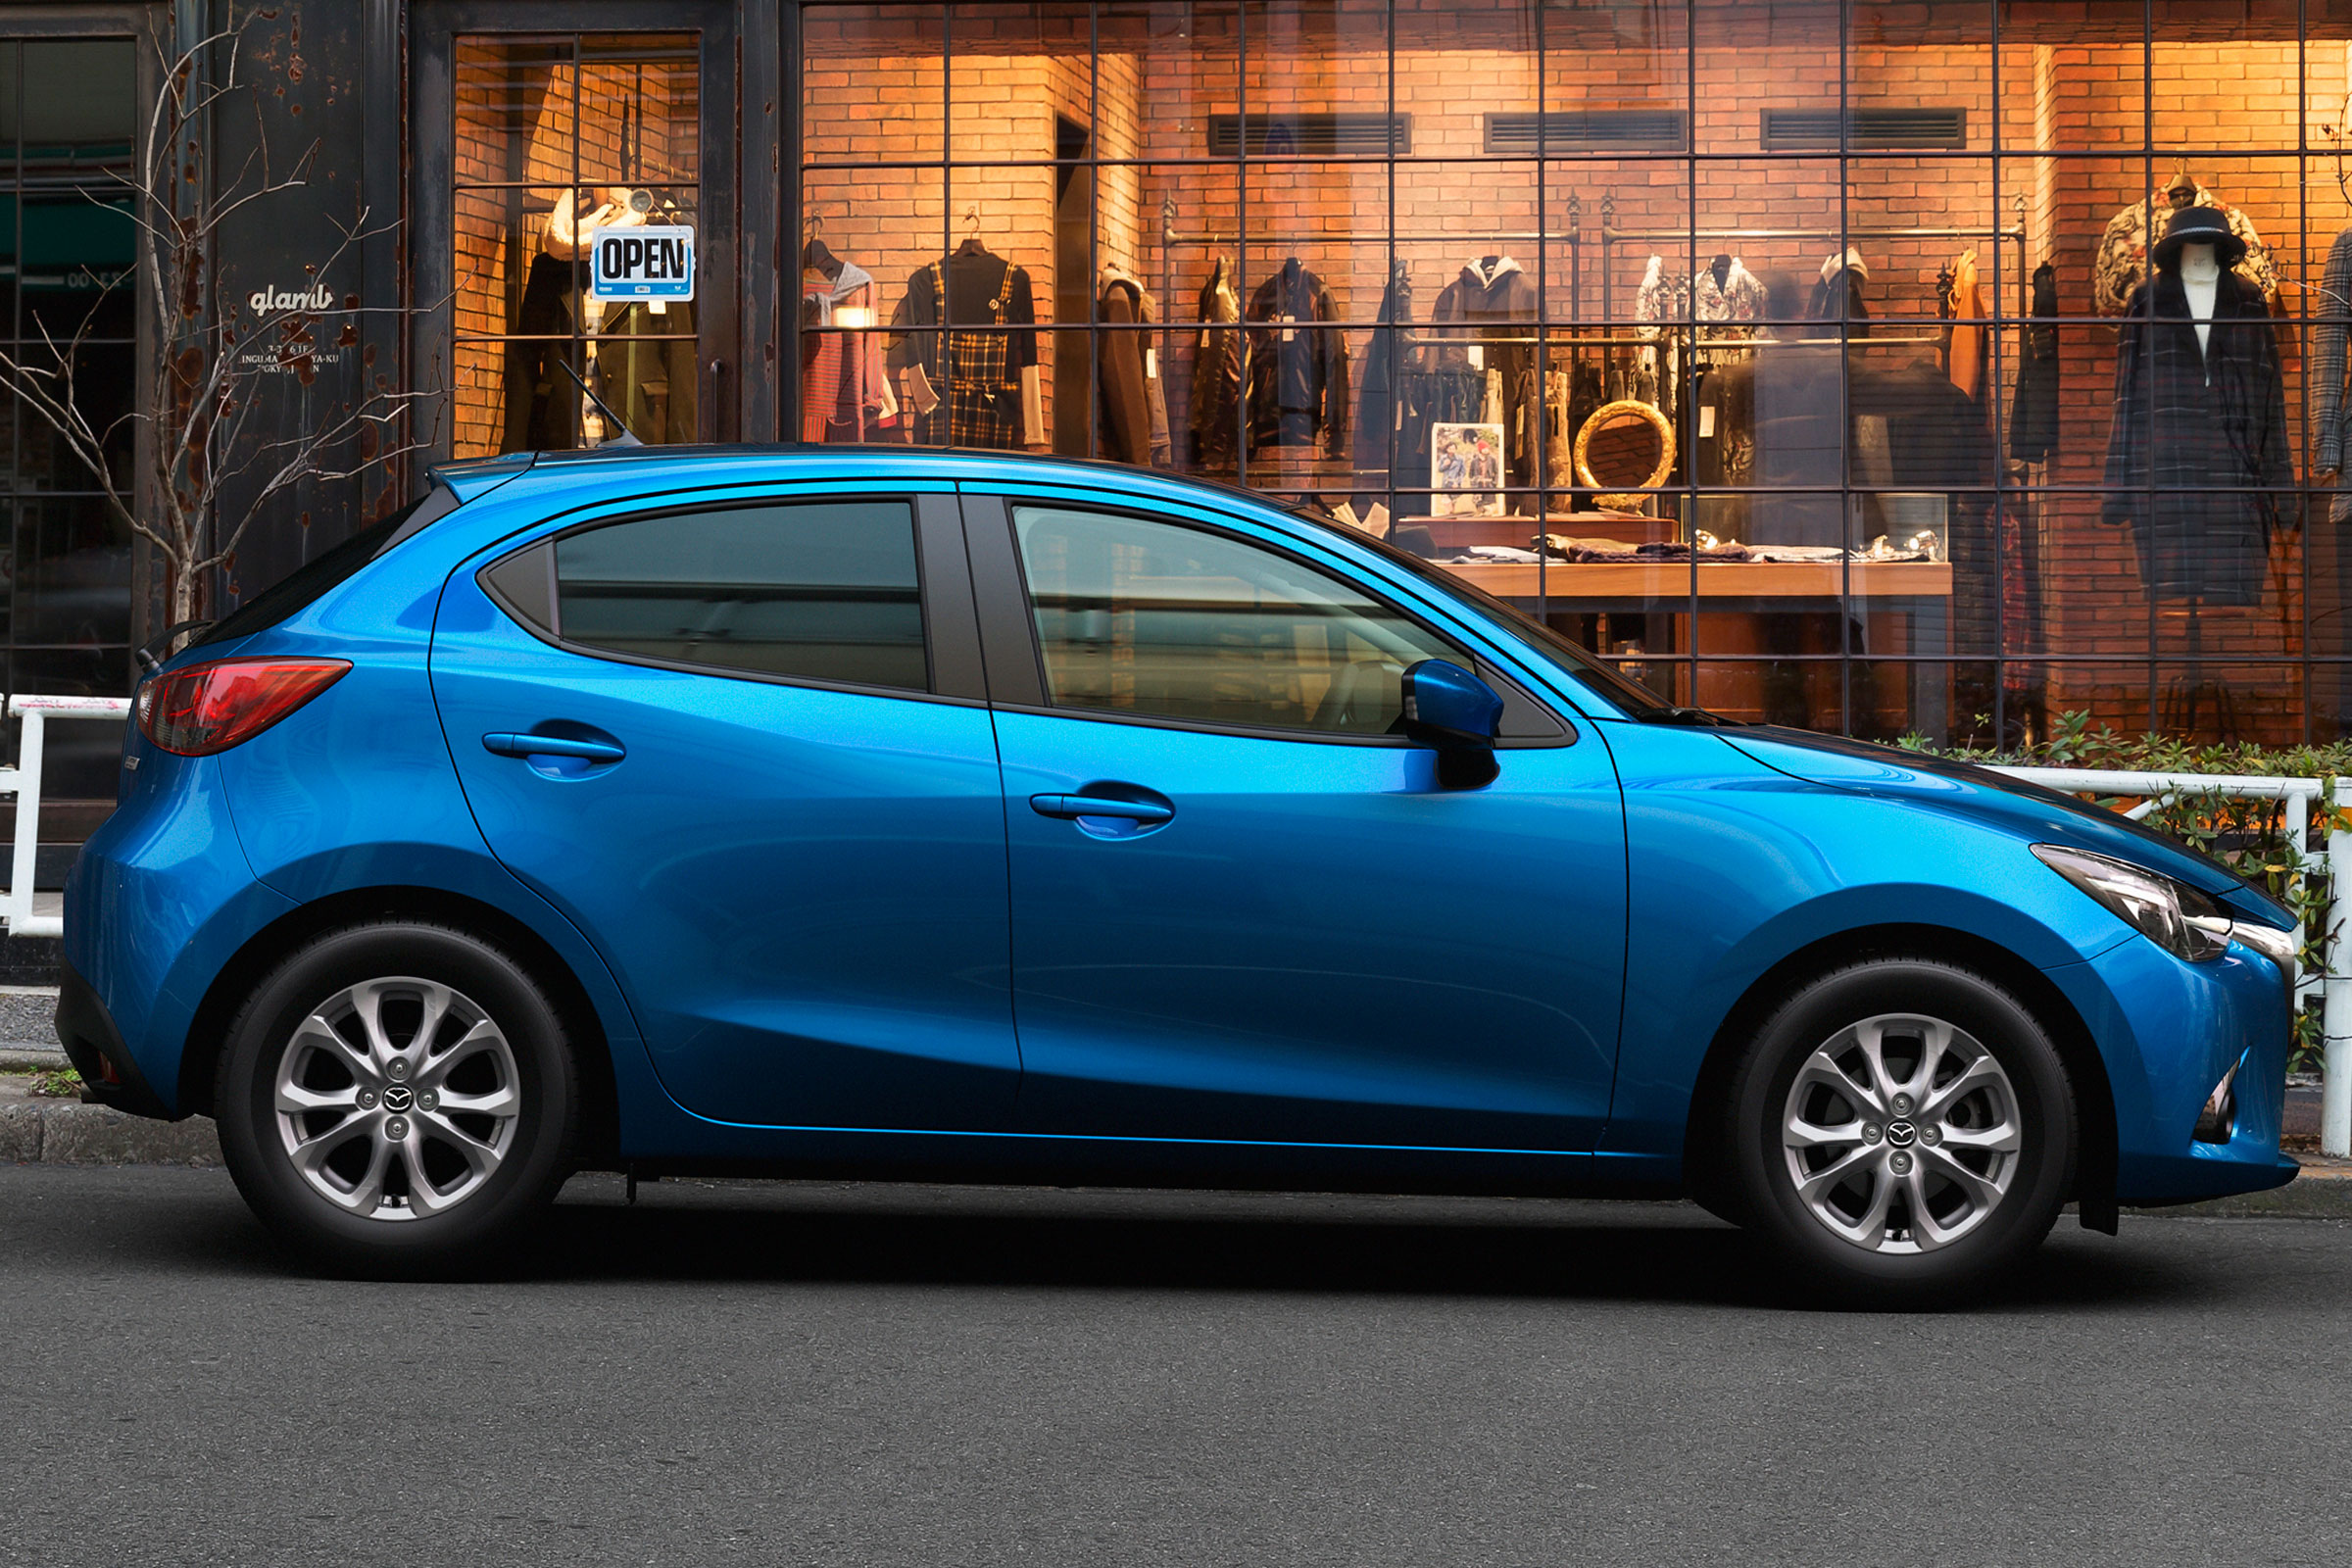 Mazda2 2014 release date, price & specs | Carbuyer